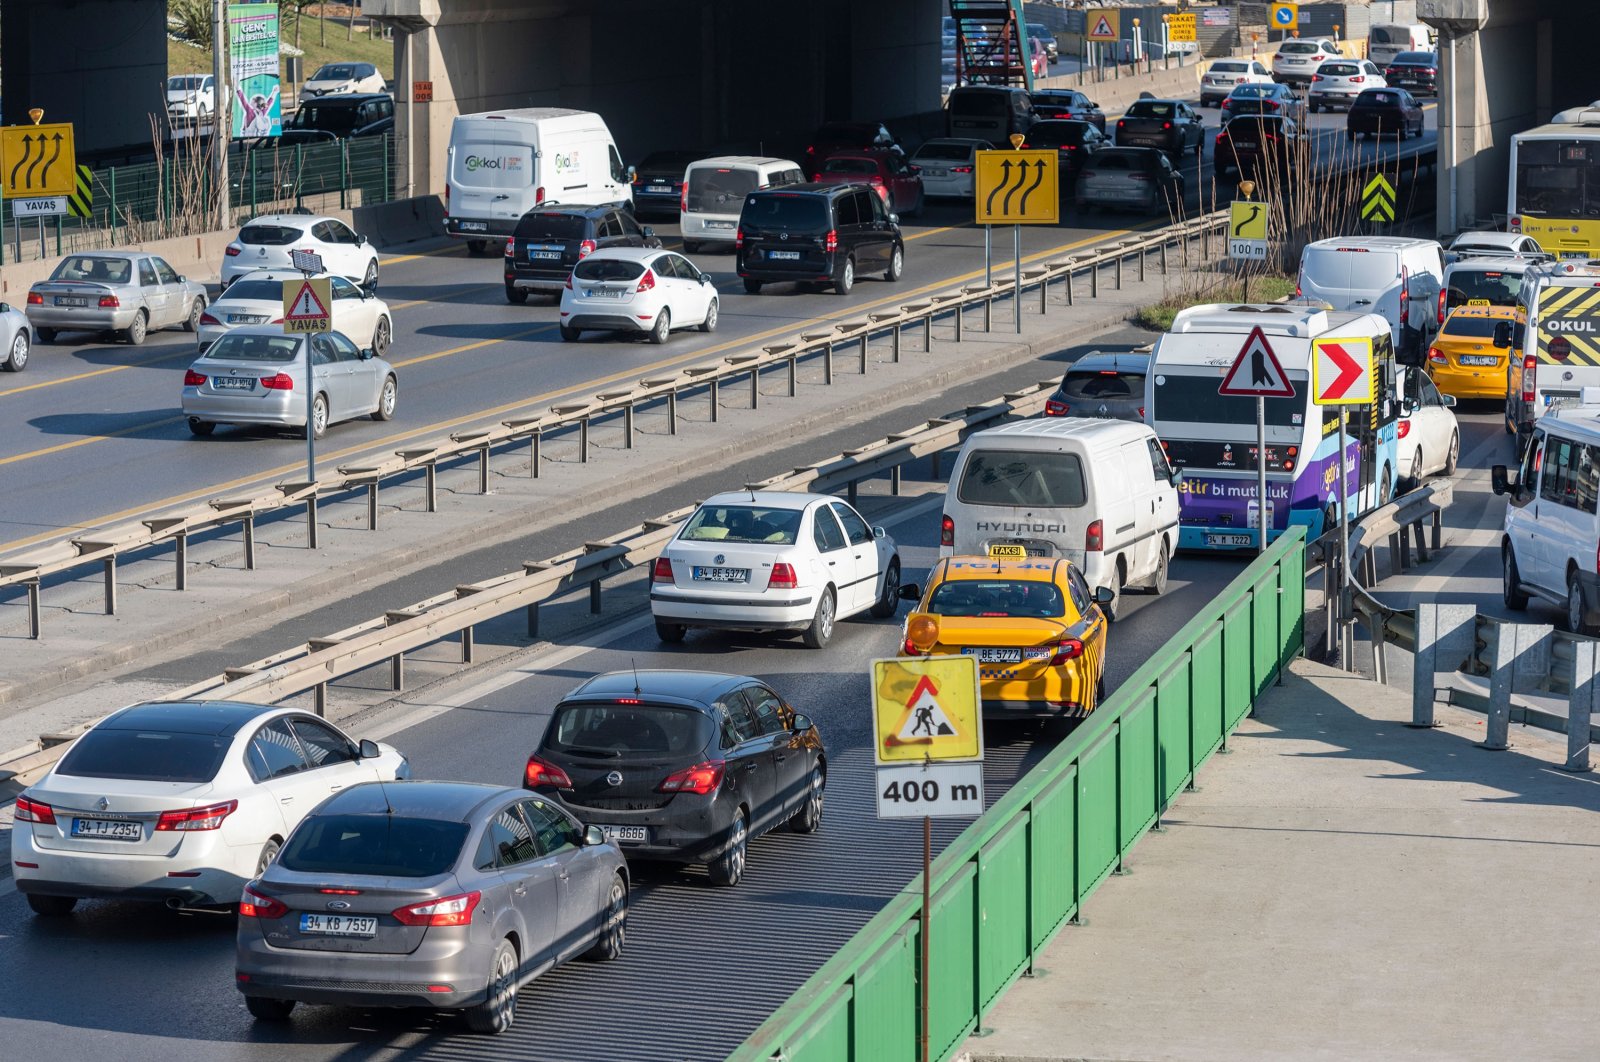 Vehicles make their way through traffic in Mecidiyeköy district, Istanbul, Turkey, Oct. 20, 2020. (Shutterstock Photo)